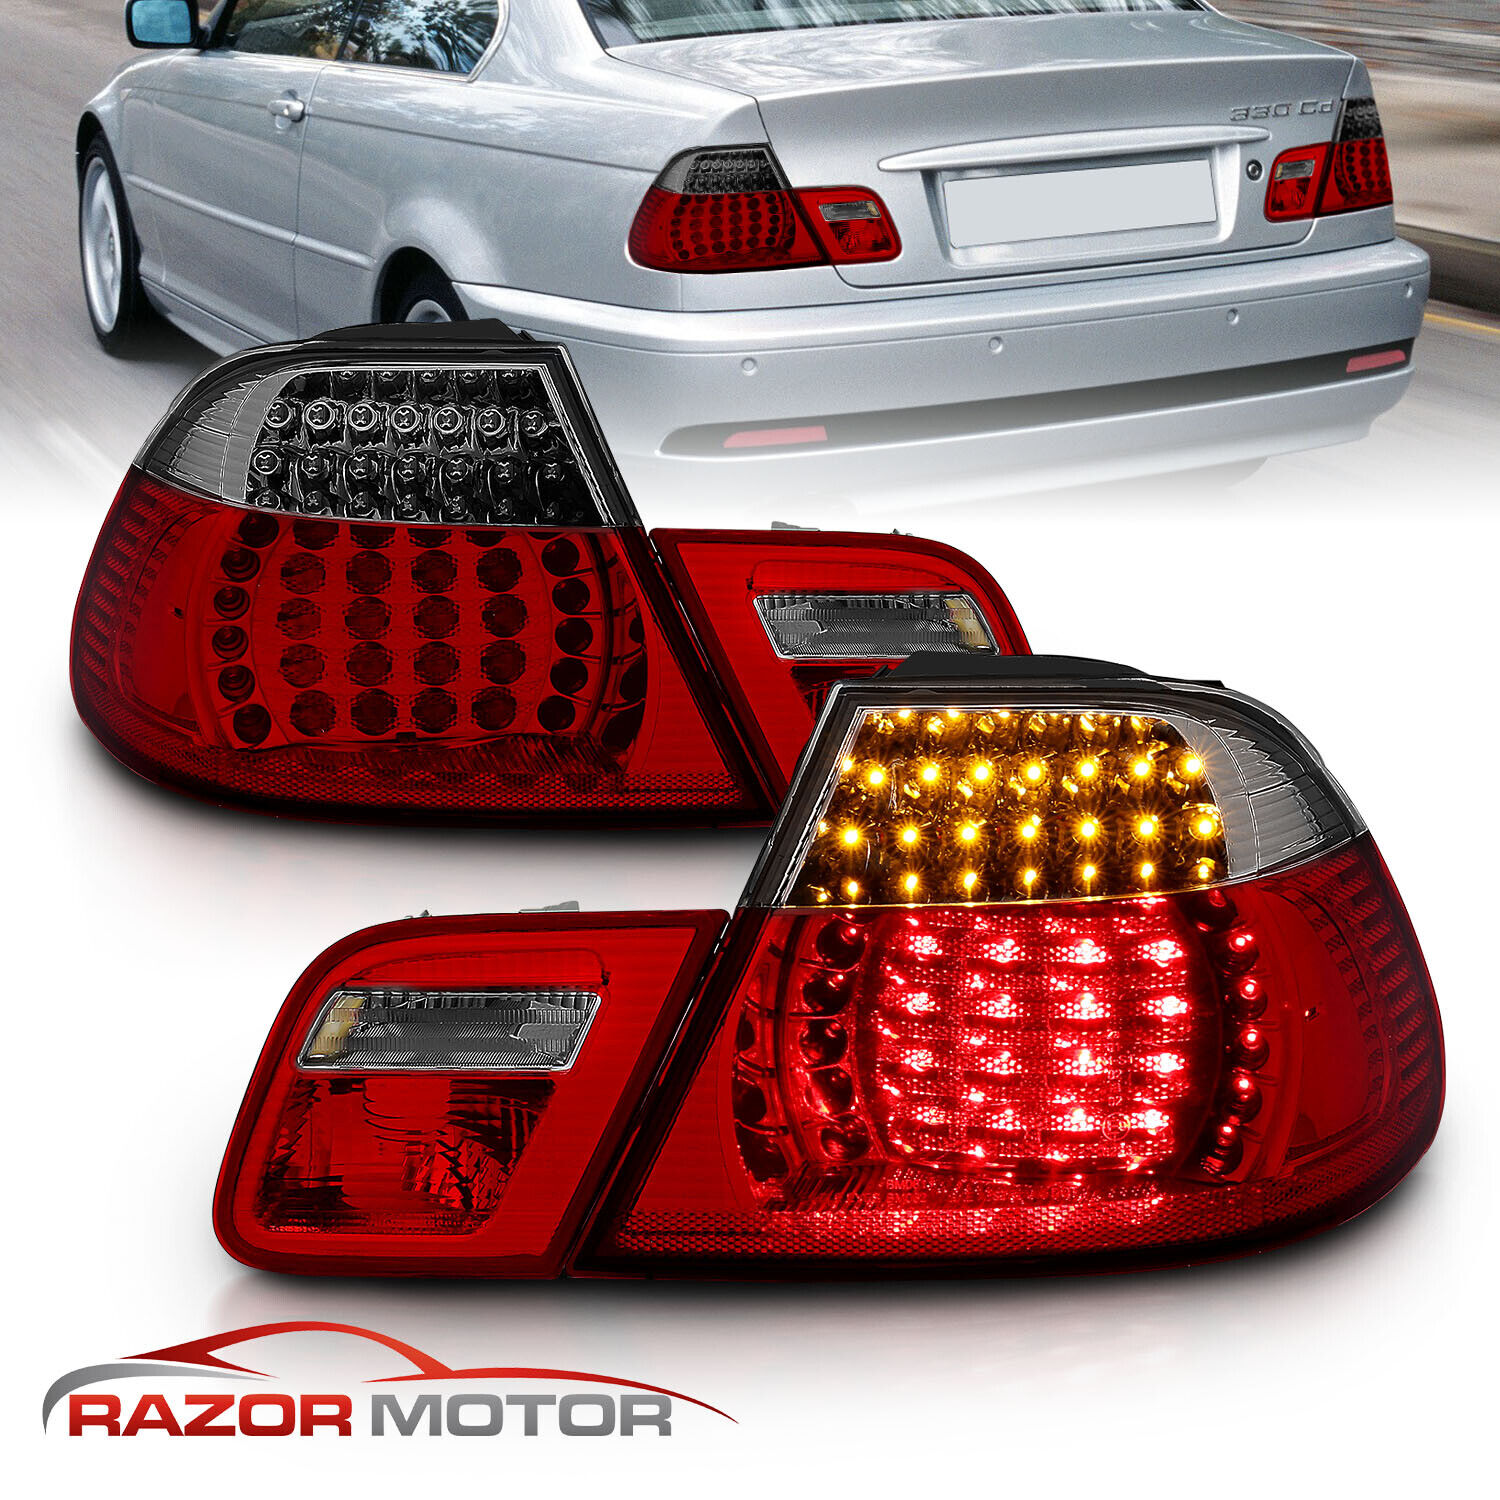 2000-2003 Red Smoke LED 2Dr Tail Light (Set) for BMW E46 325Ci/330Ci/M3 Coupe